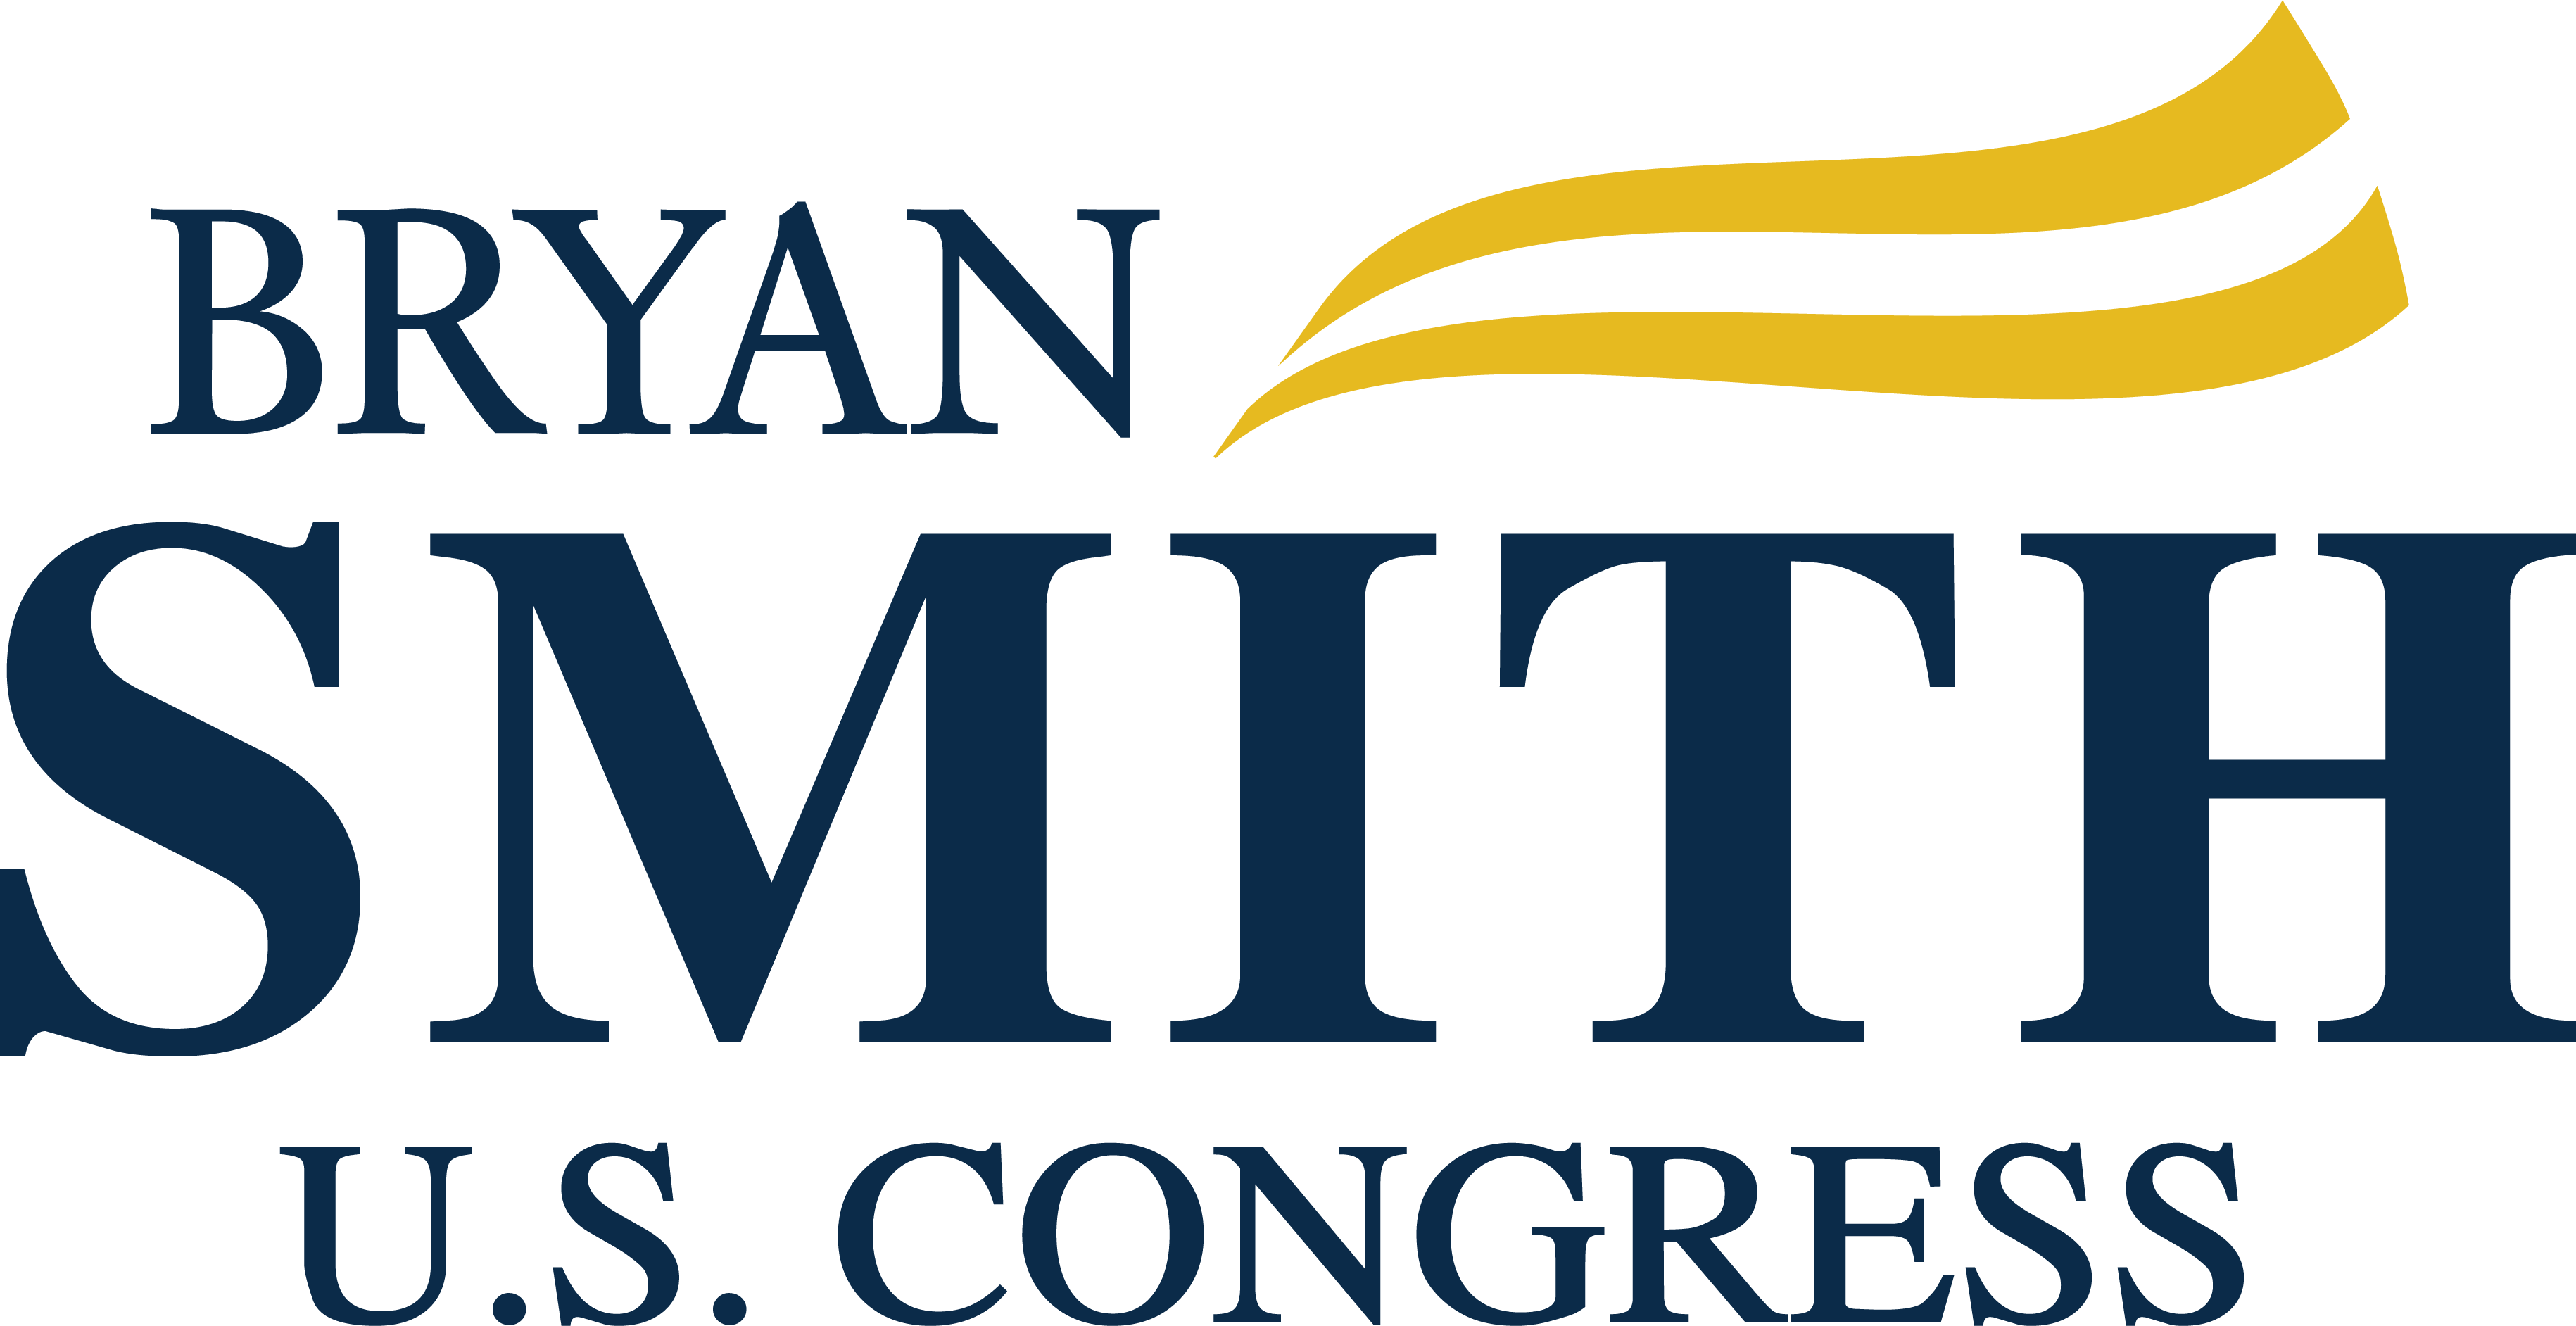 Bryan Smith for Congress